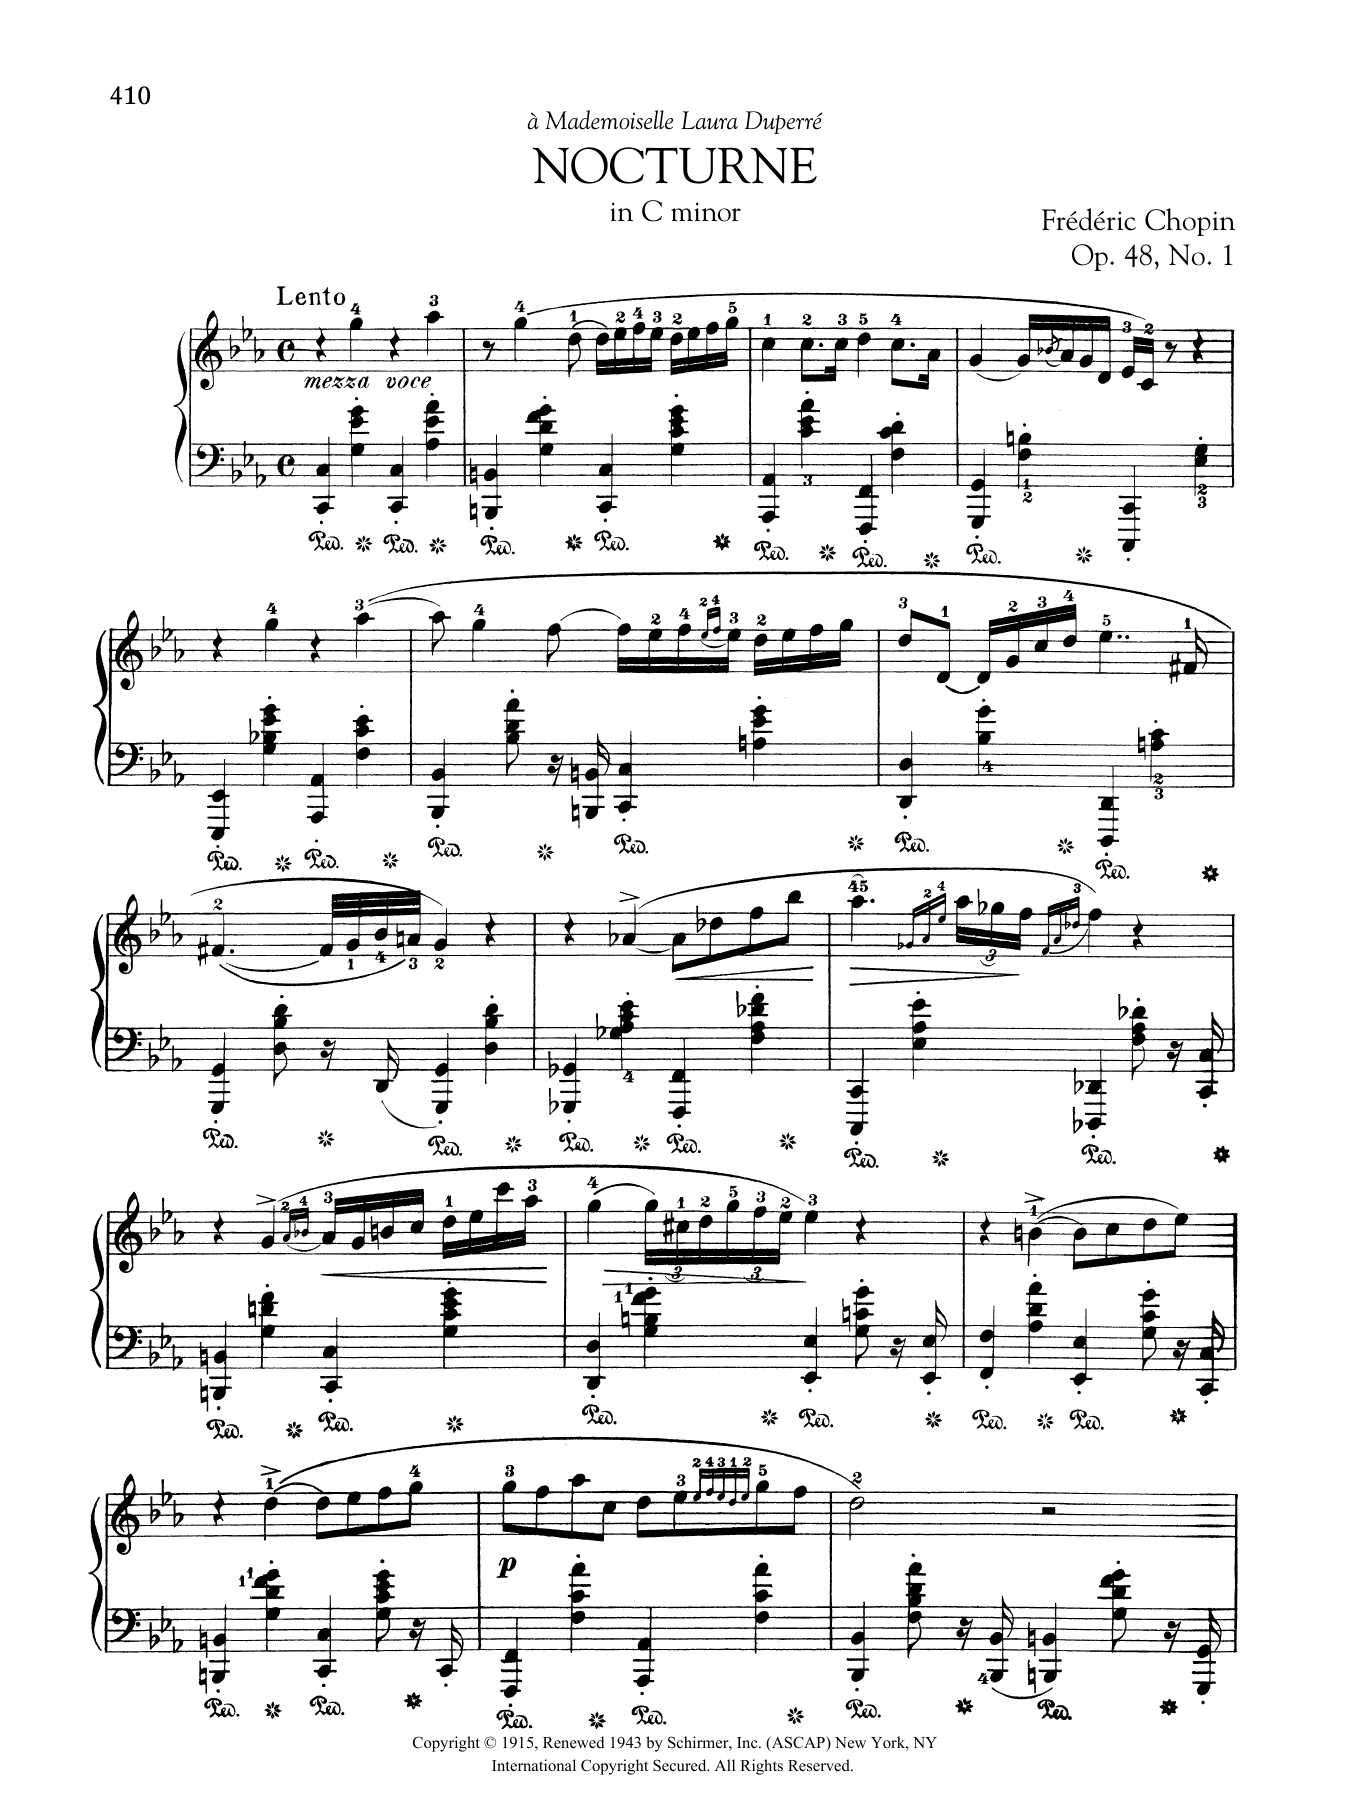 Nocturne in C minor, Op. 48, No. 1 sheet music